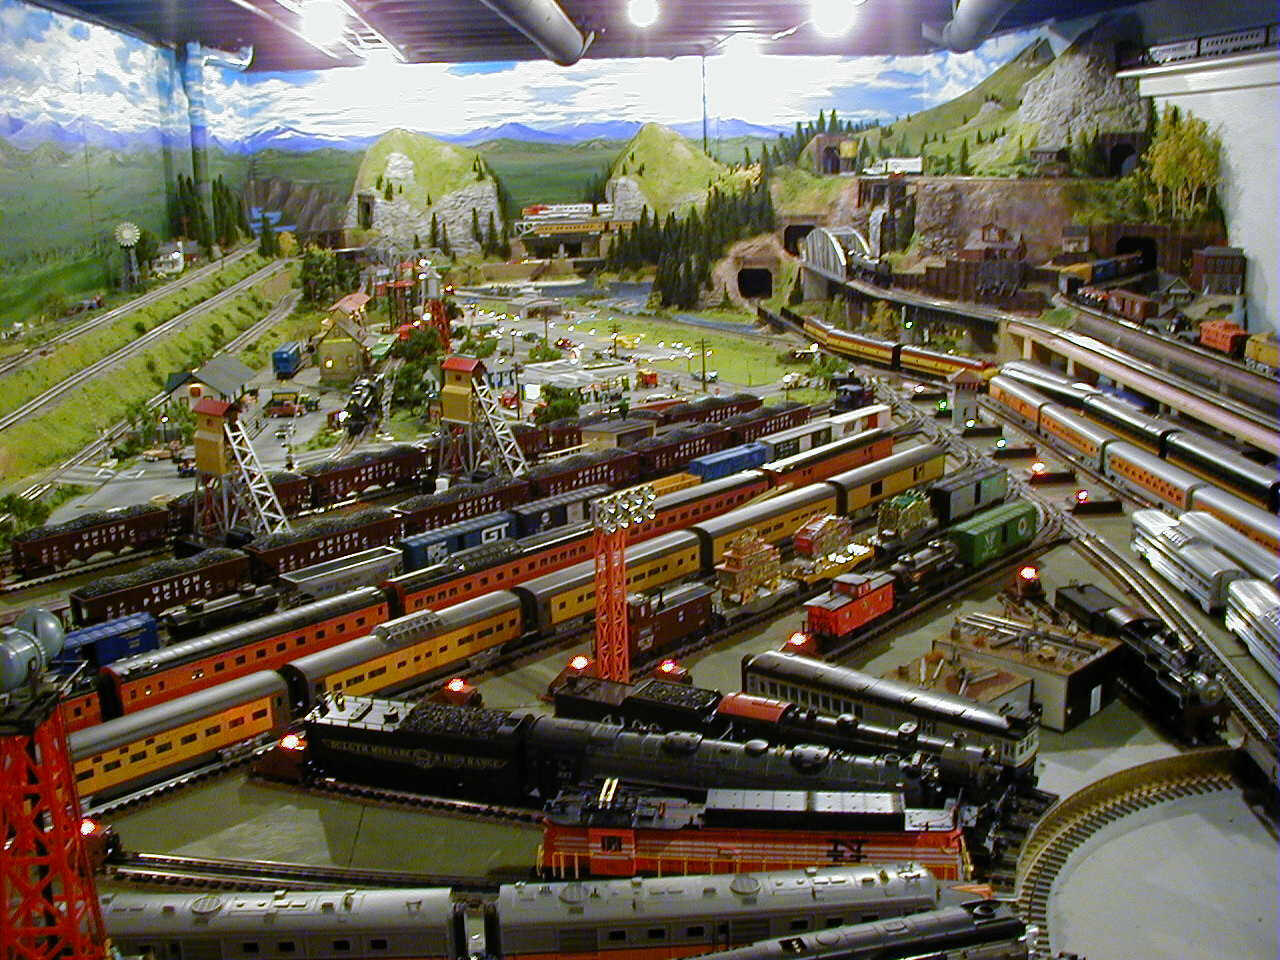  scale model train layout plans ho scale model train layouts plans